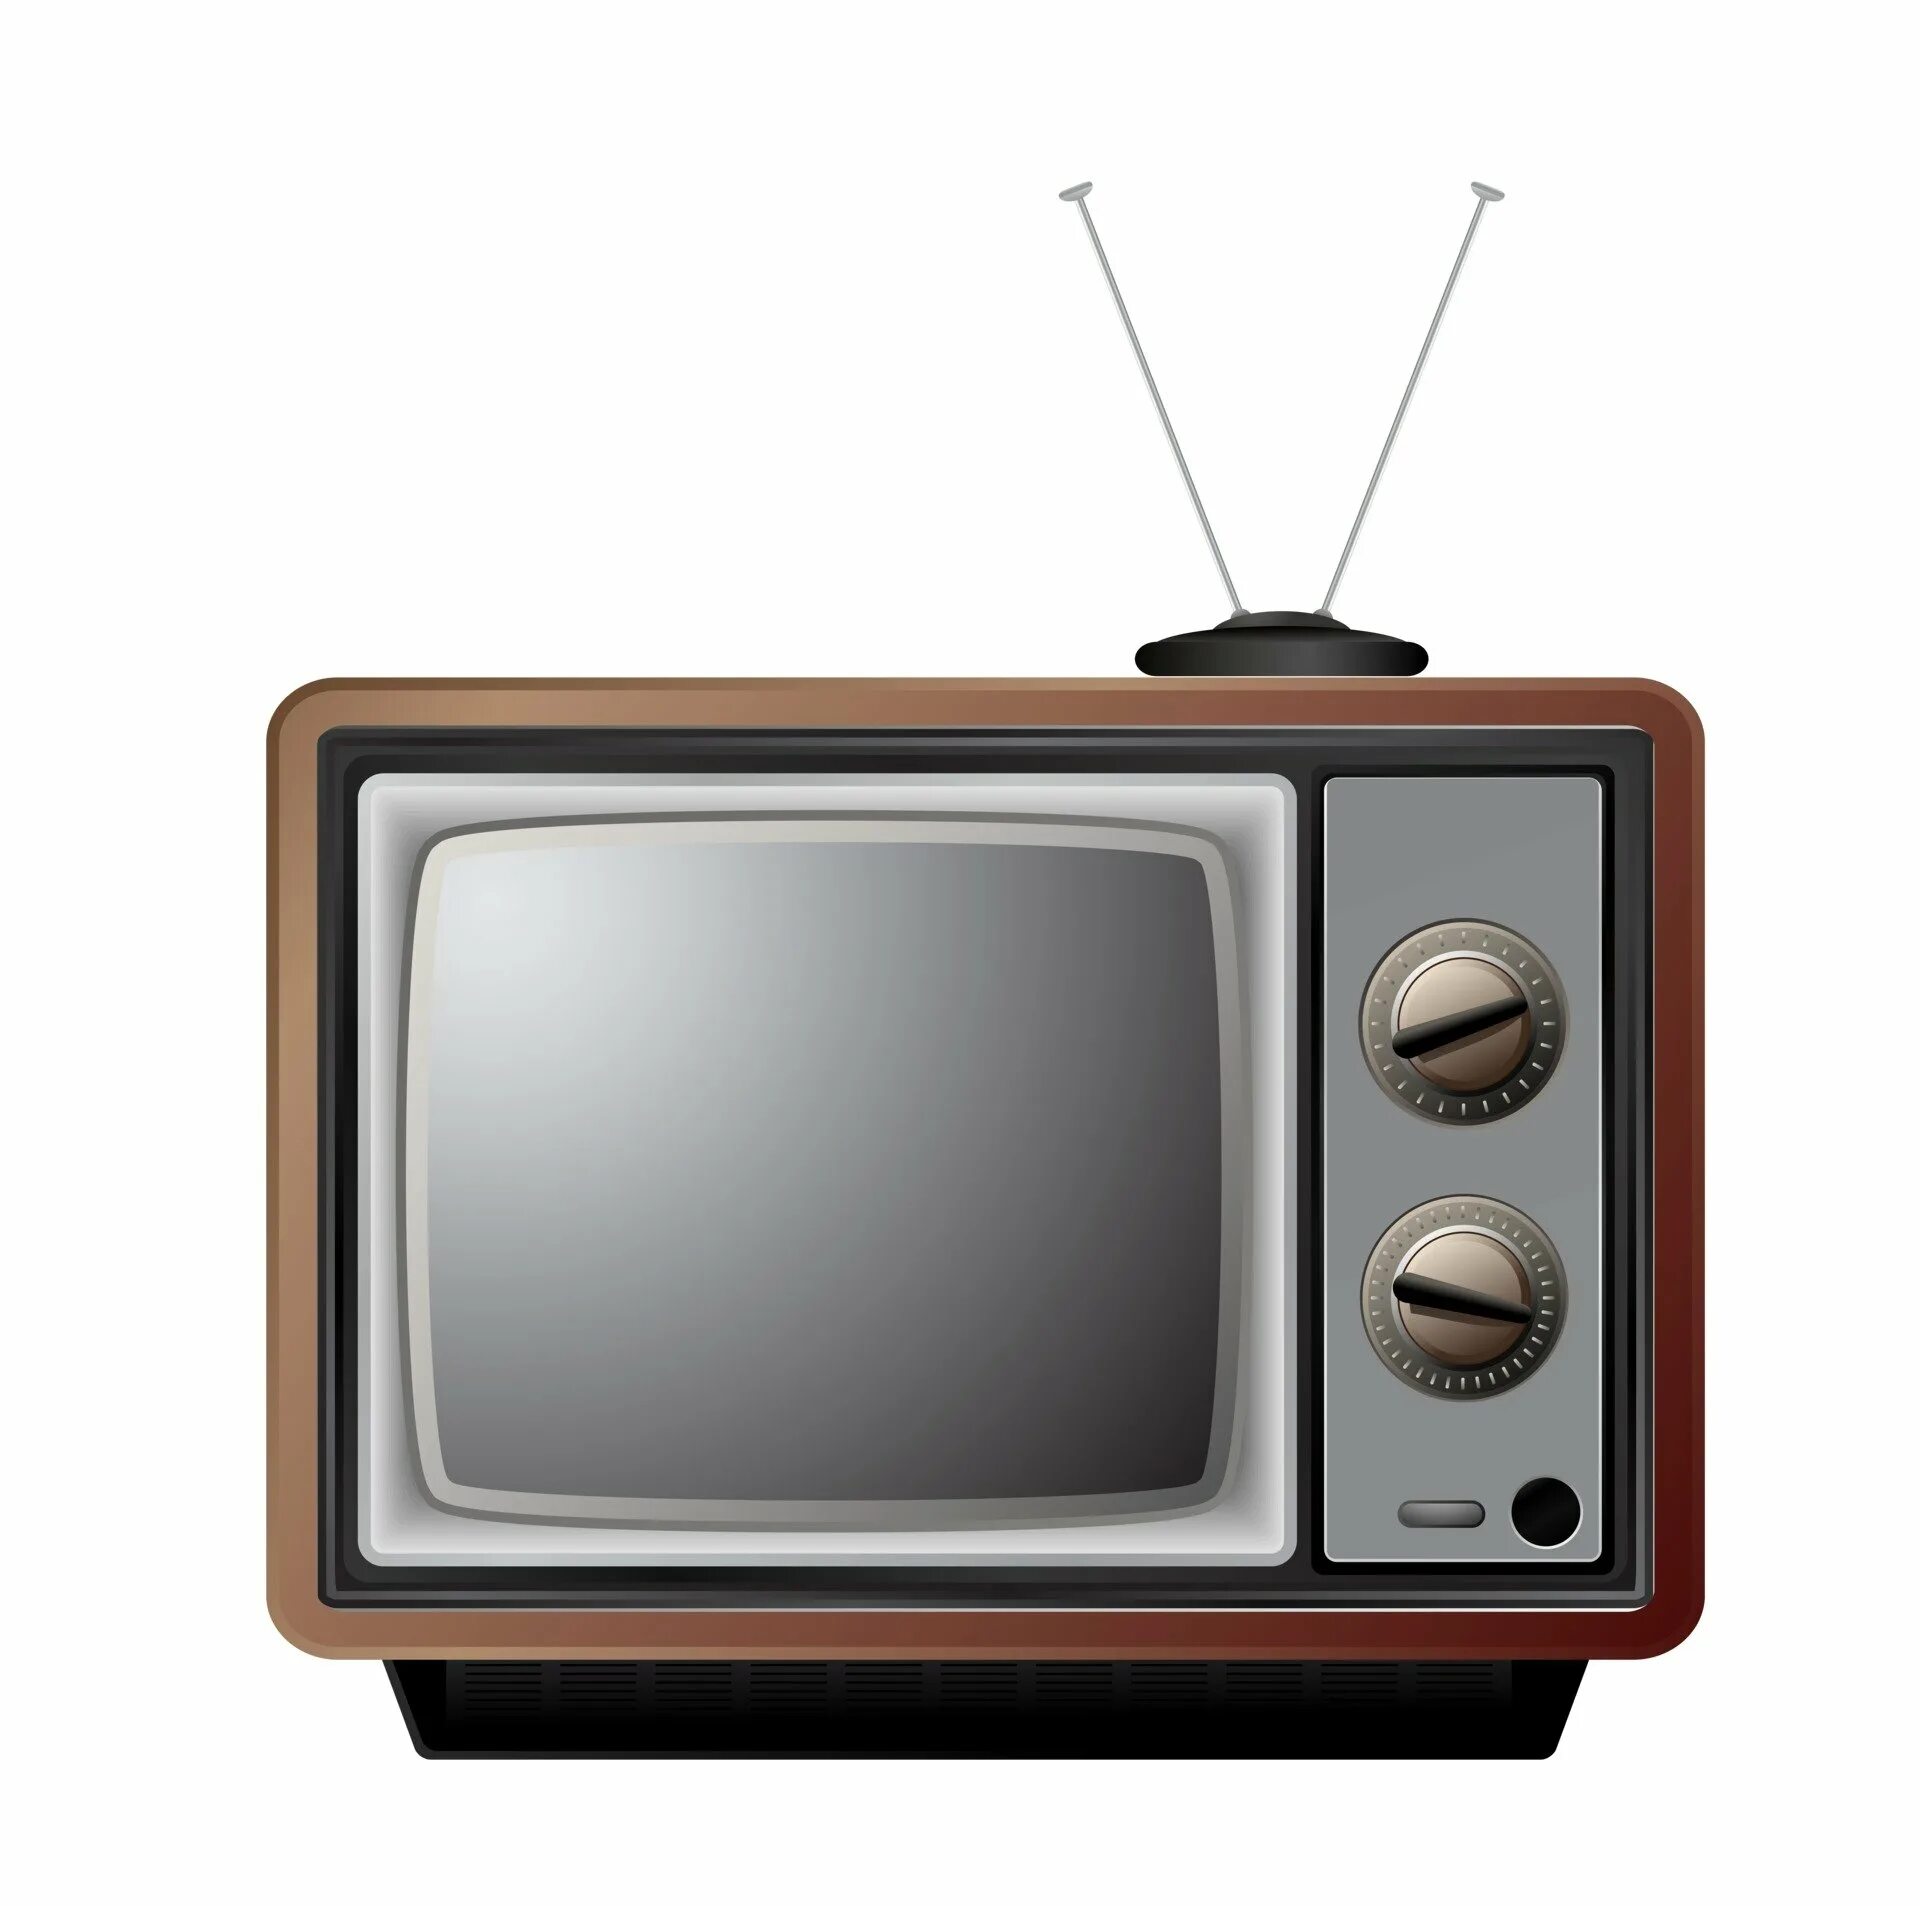 Старый телевизор. Старый телевизор с антенной. Антенна для телевизора. Старая антенна для телевизора.